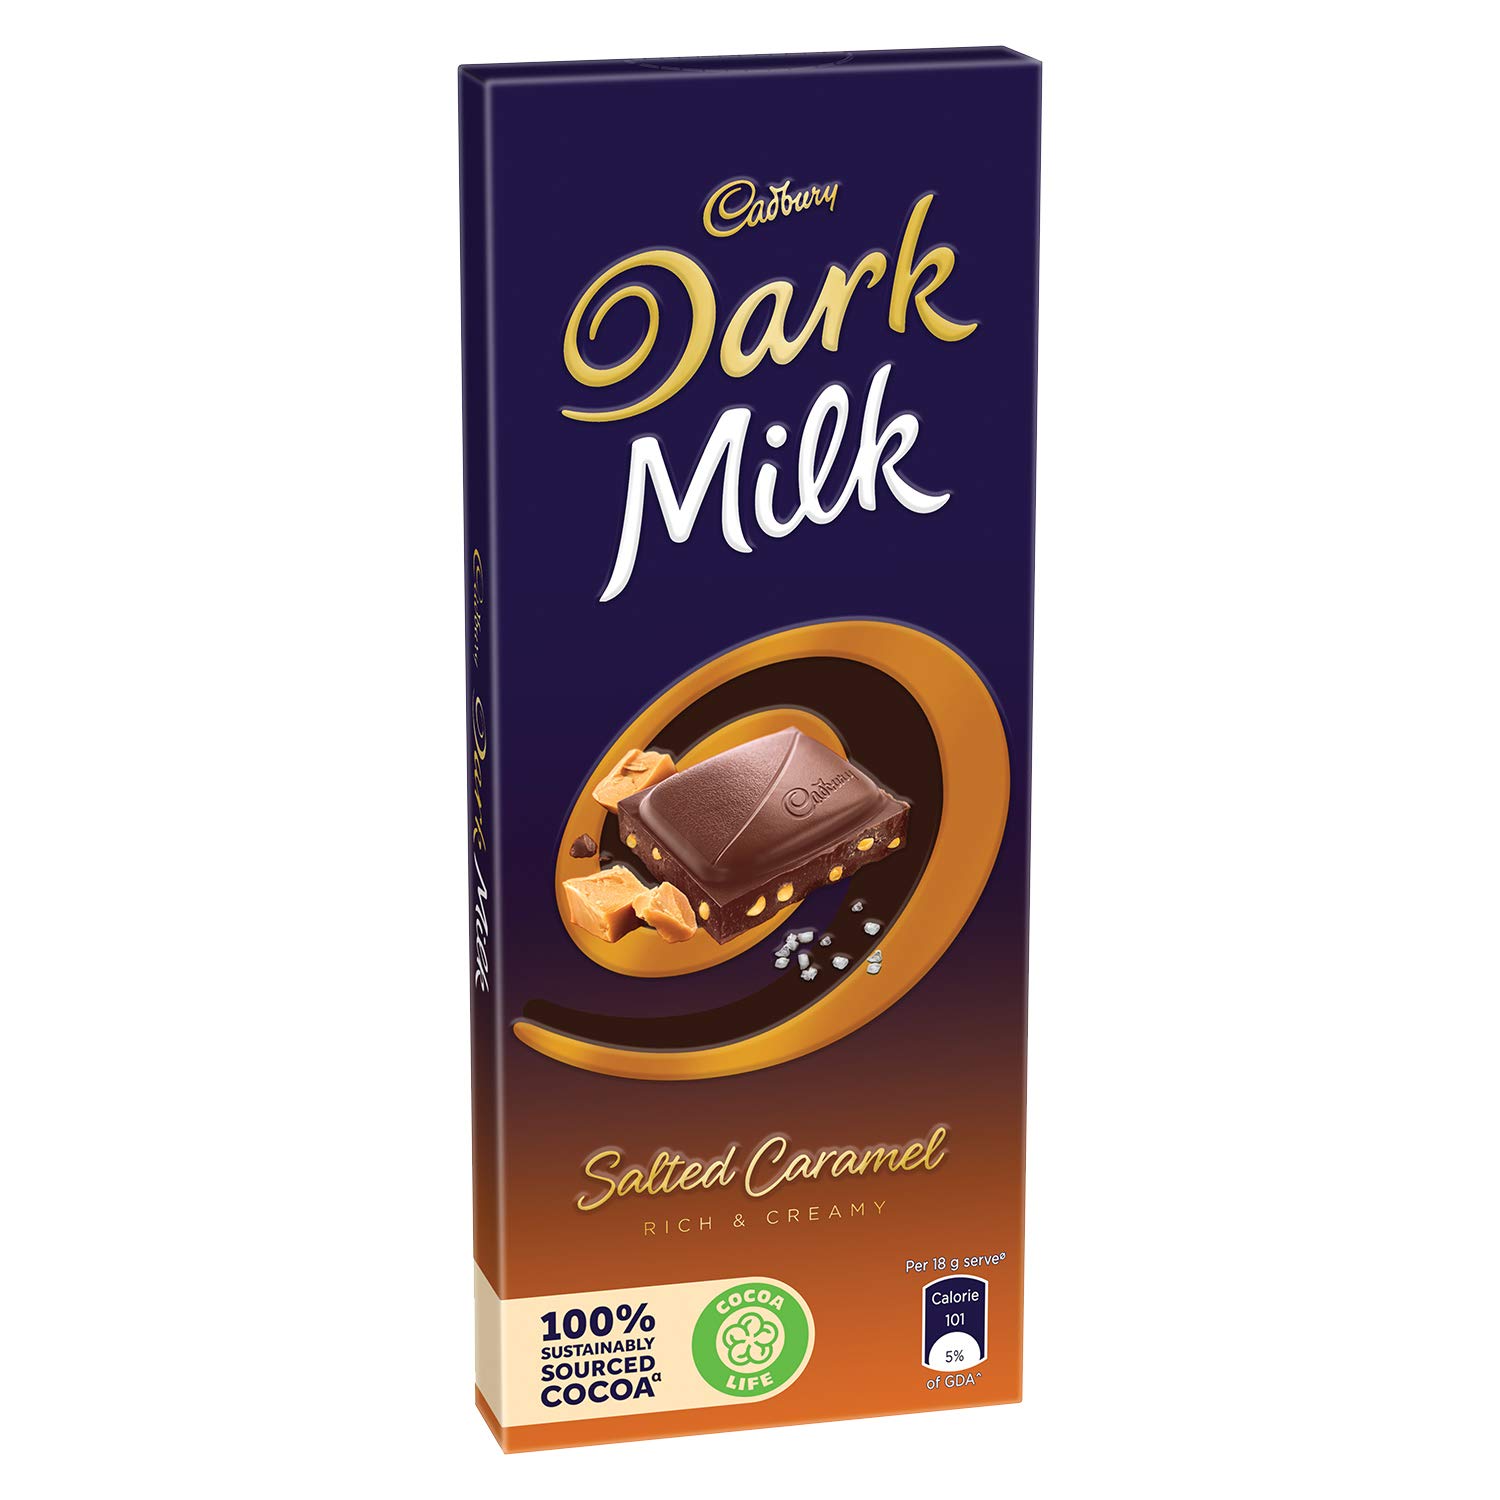 Cadbury Dark Milk Salted Caramel Chocolate Bar Image